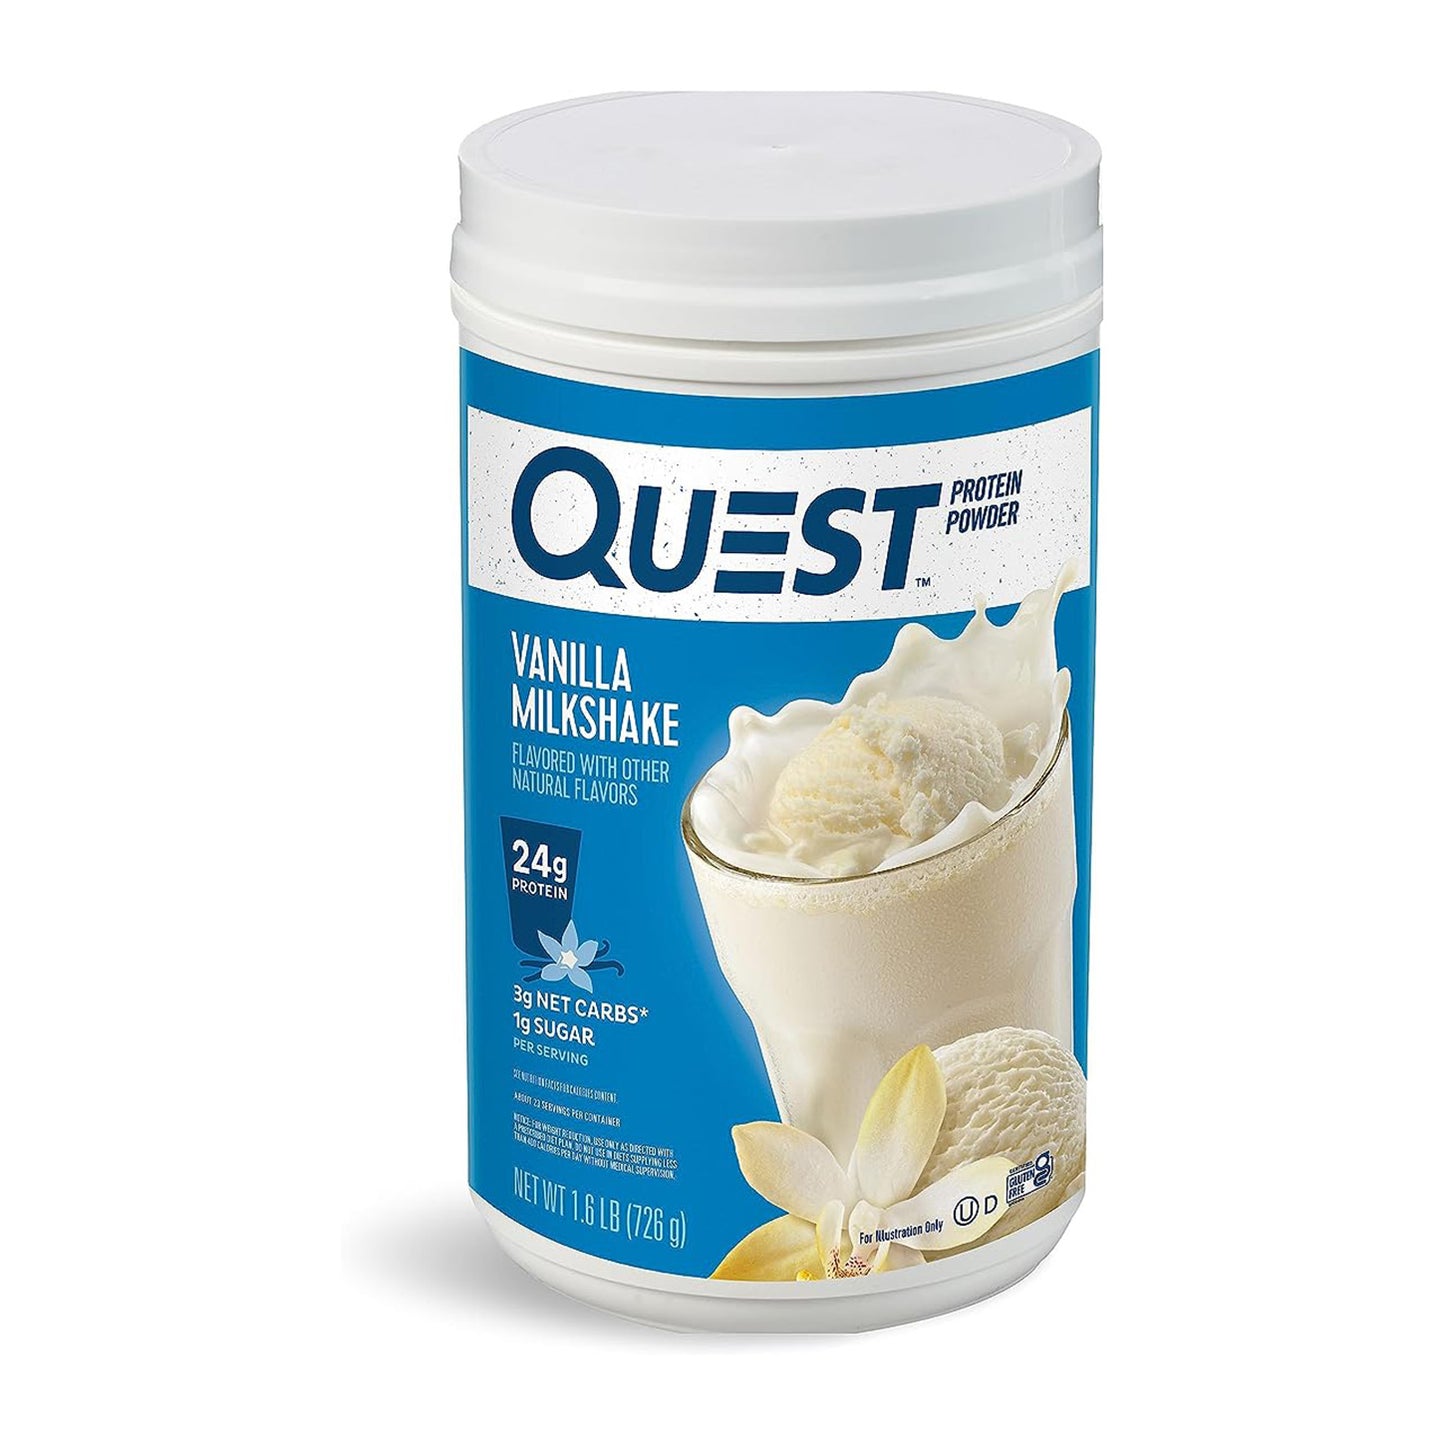 Protein Powder de Quest Nutrition | ProHealth Shop [Panamá]